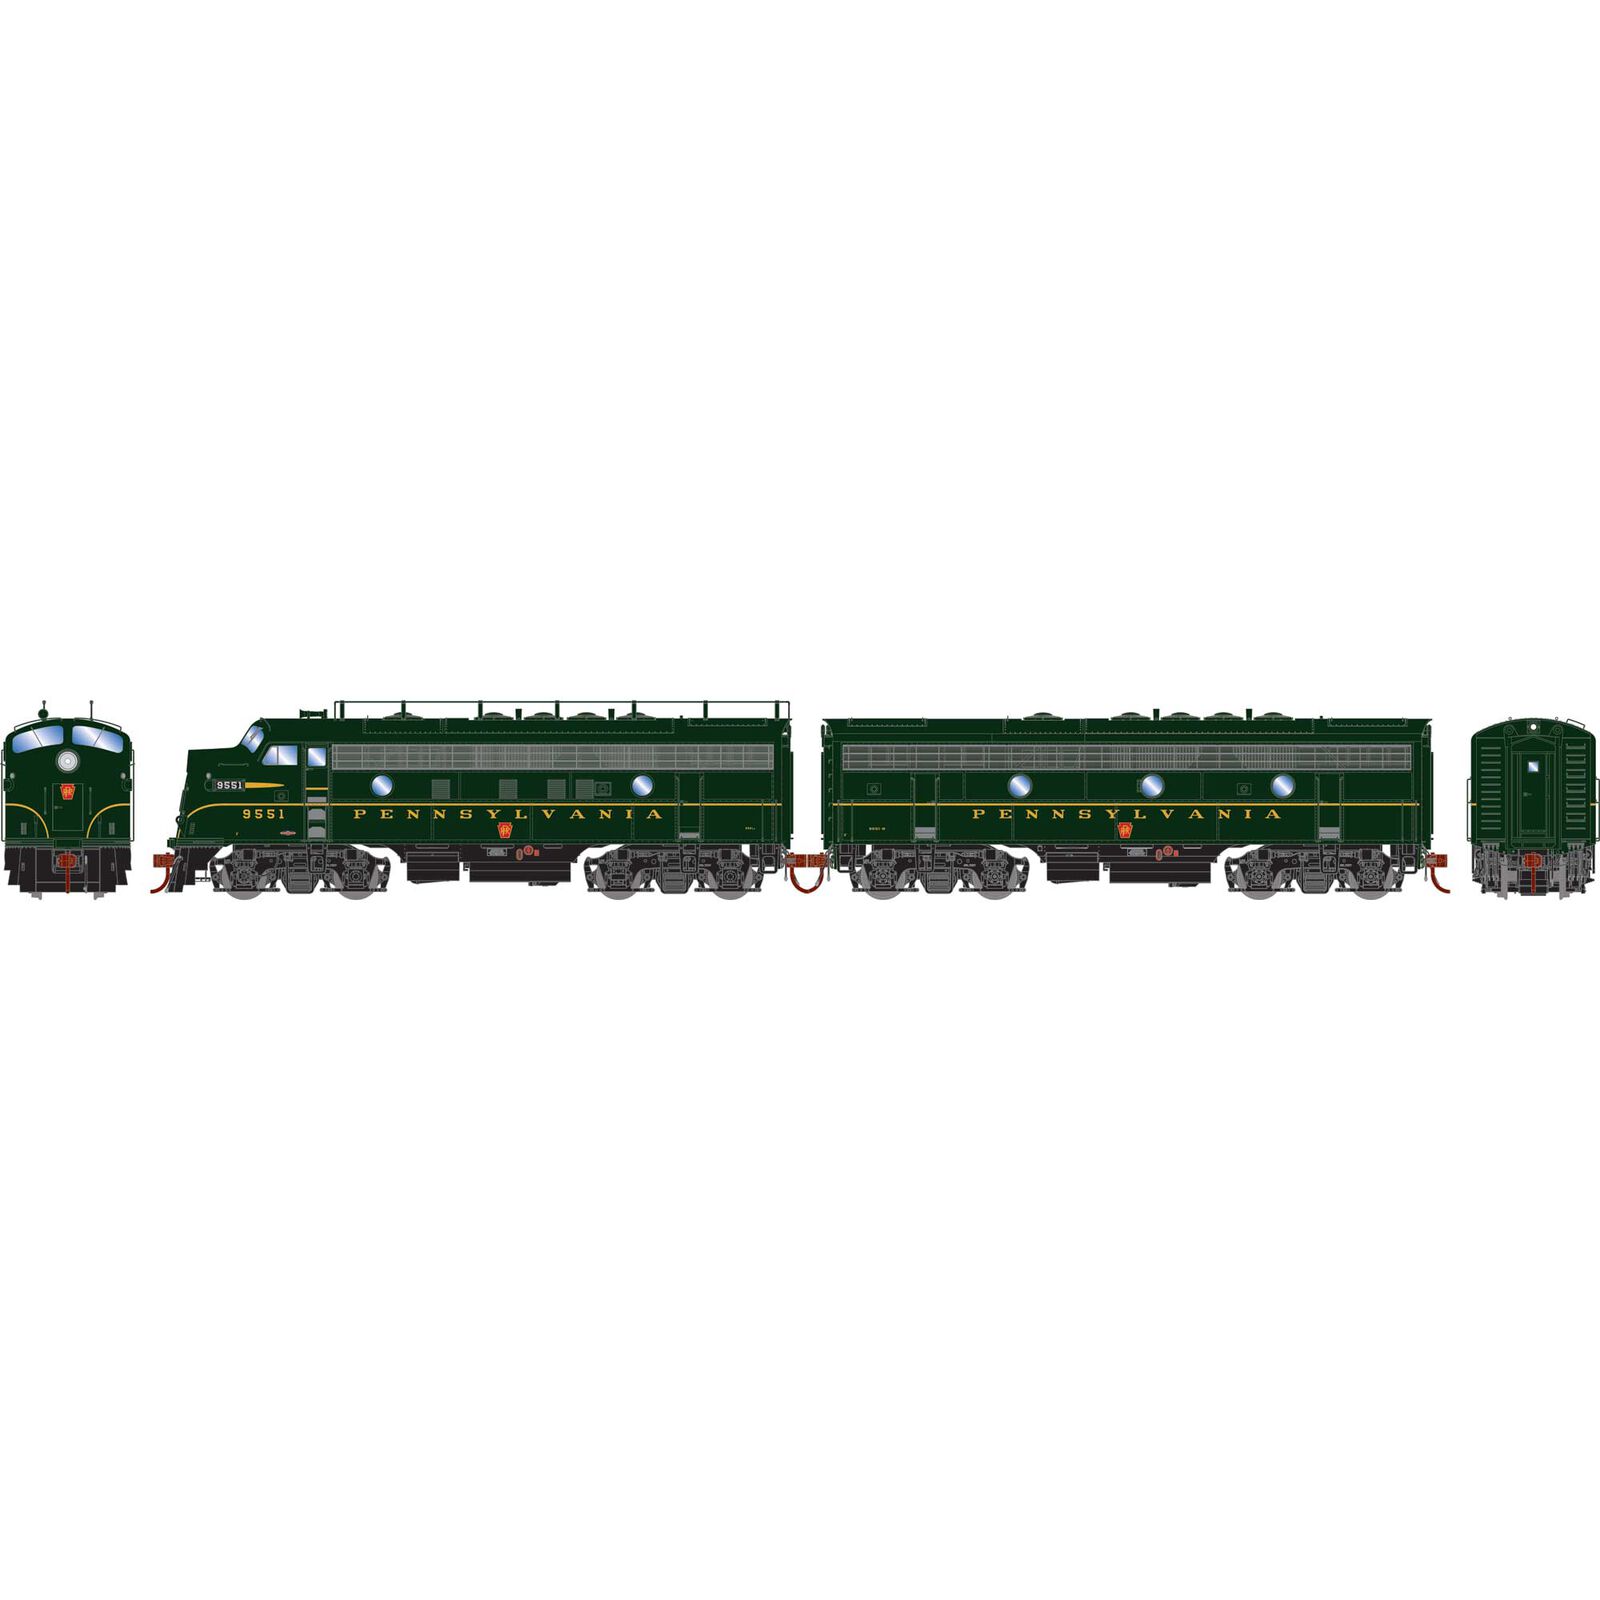 HO F5A / F5B Locomotive Set, PRR #9551A, #9551B